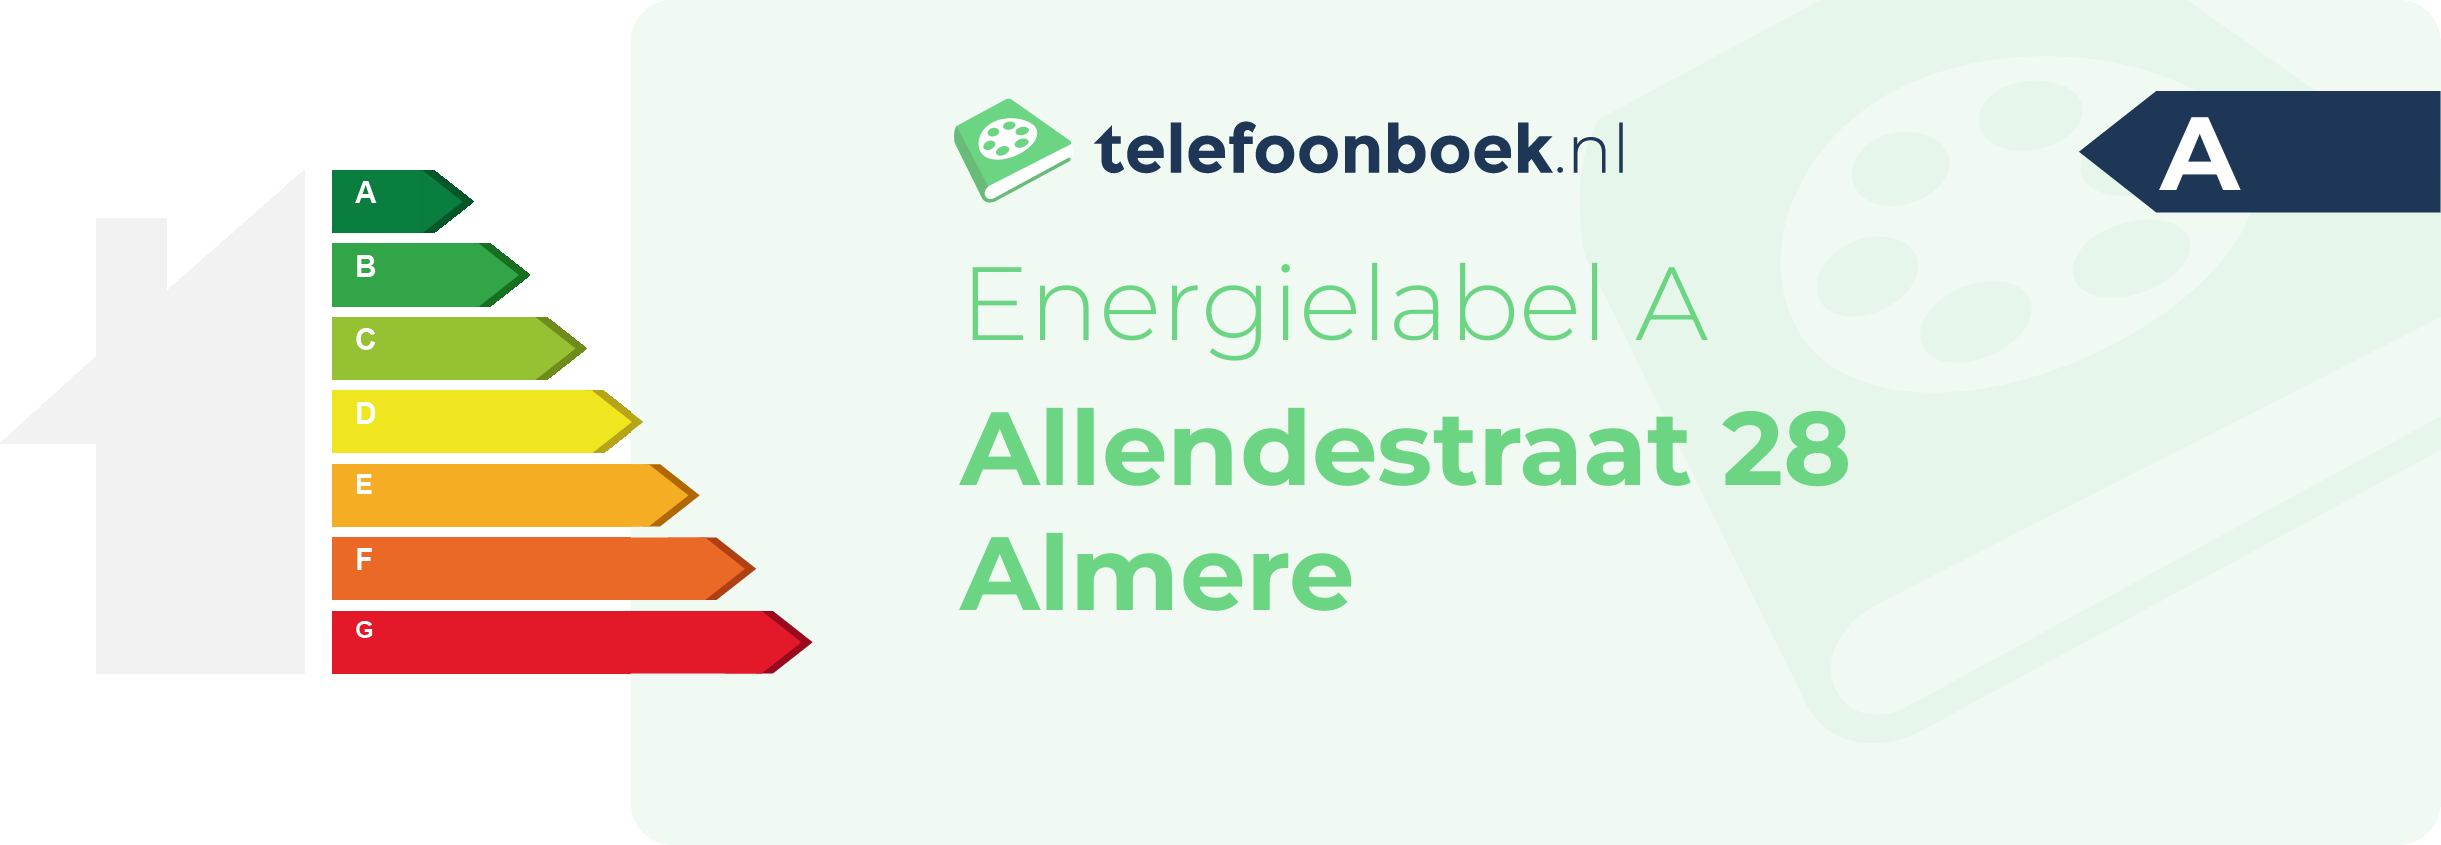 Energielabel Allendestraat 28 Almere